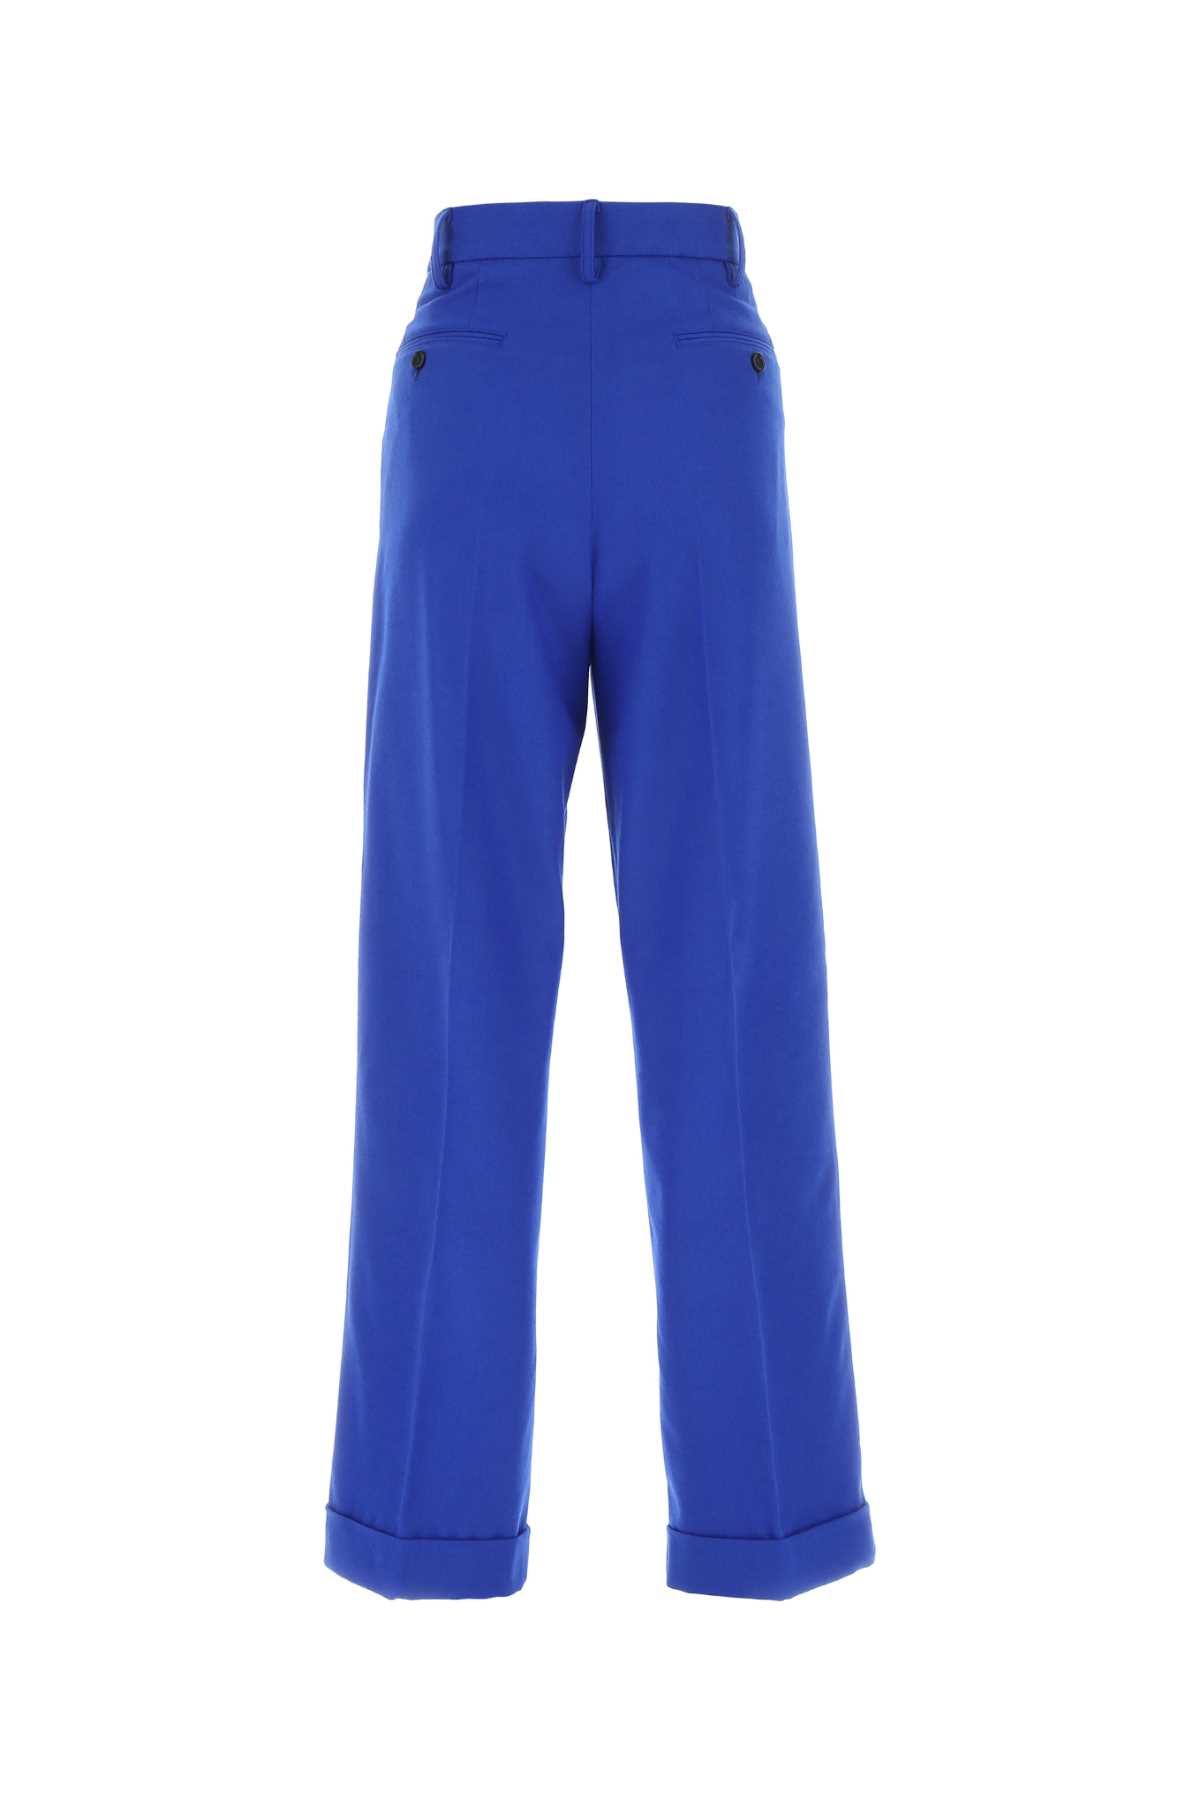 Marni Electric Blue Stretch Wool Blend Wide-leg Pant In 00b57